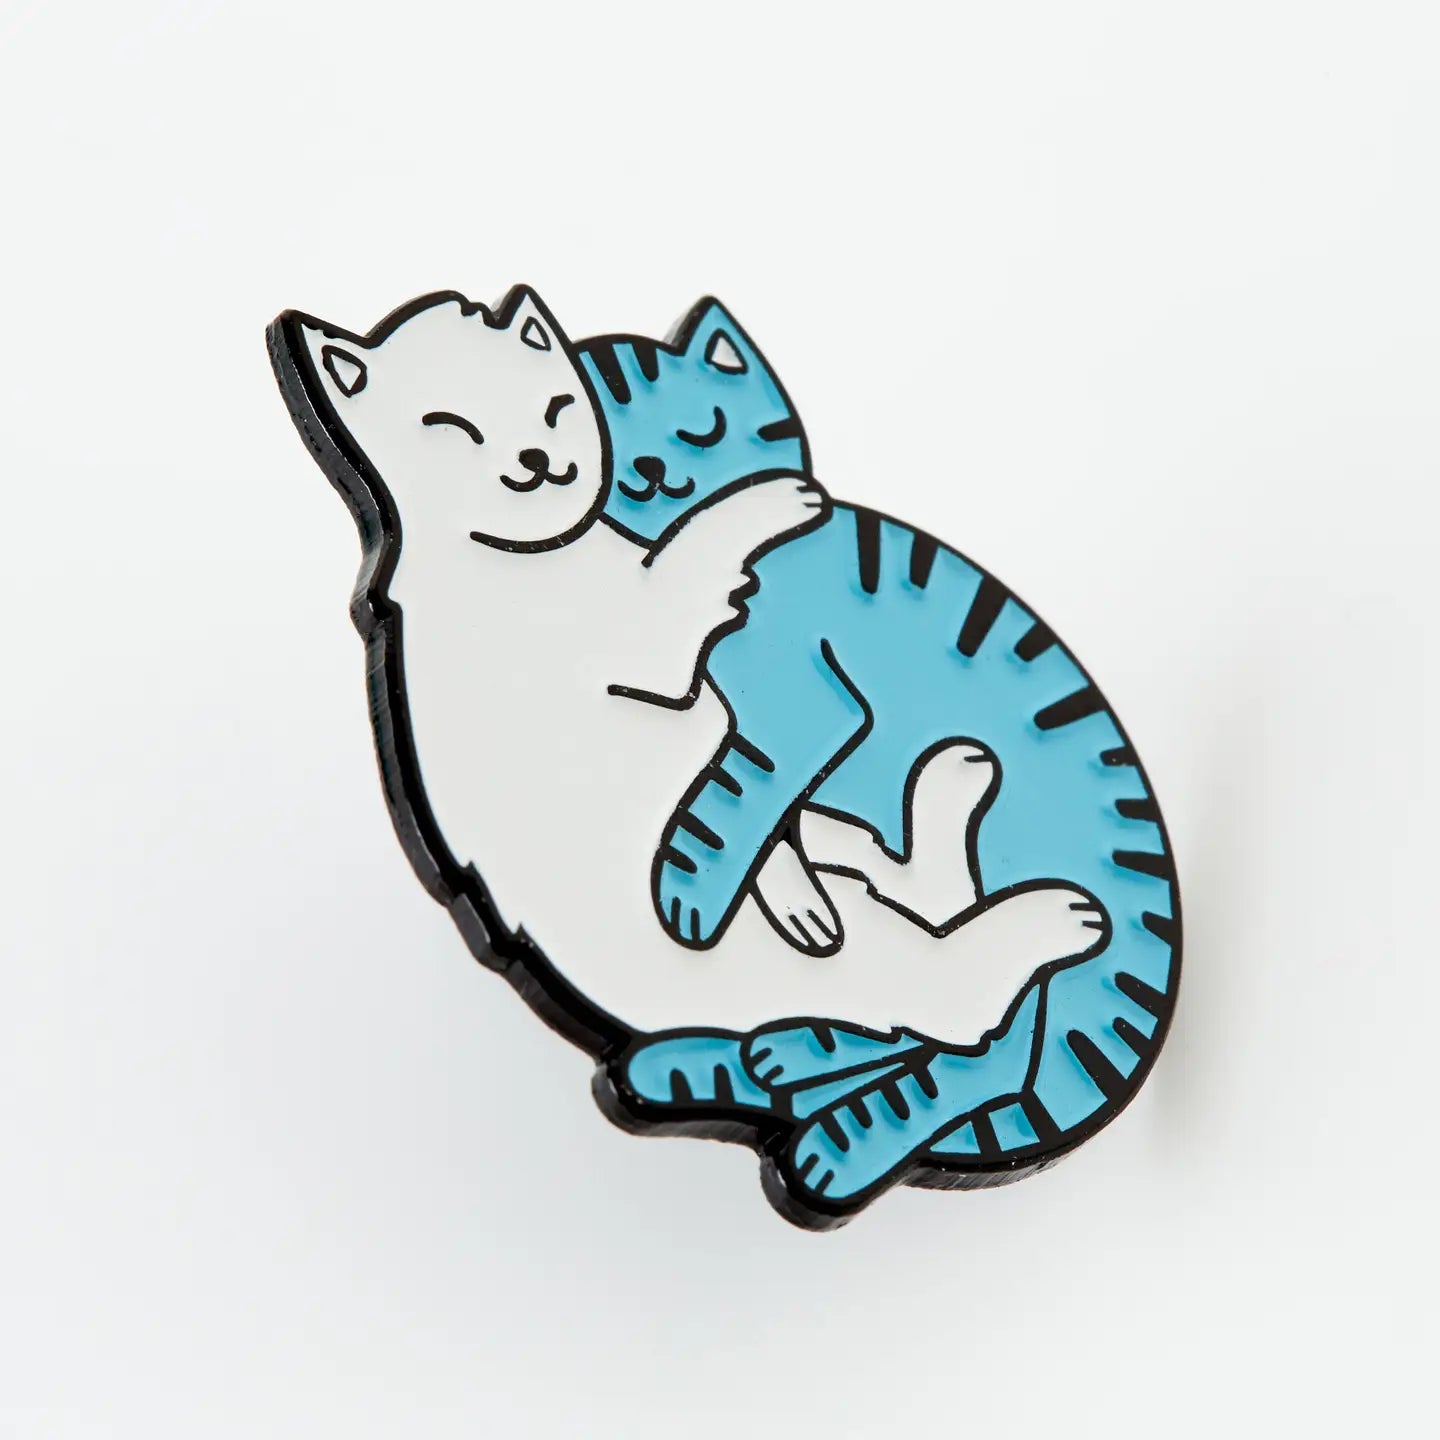 Cuddling Cats pin